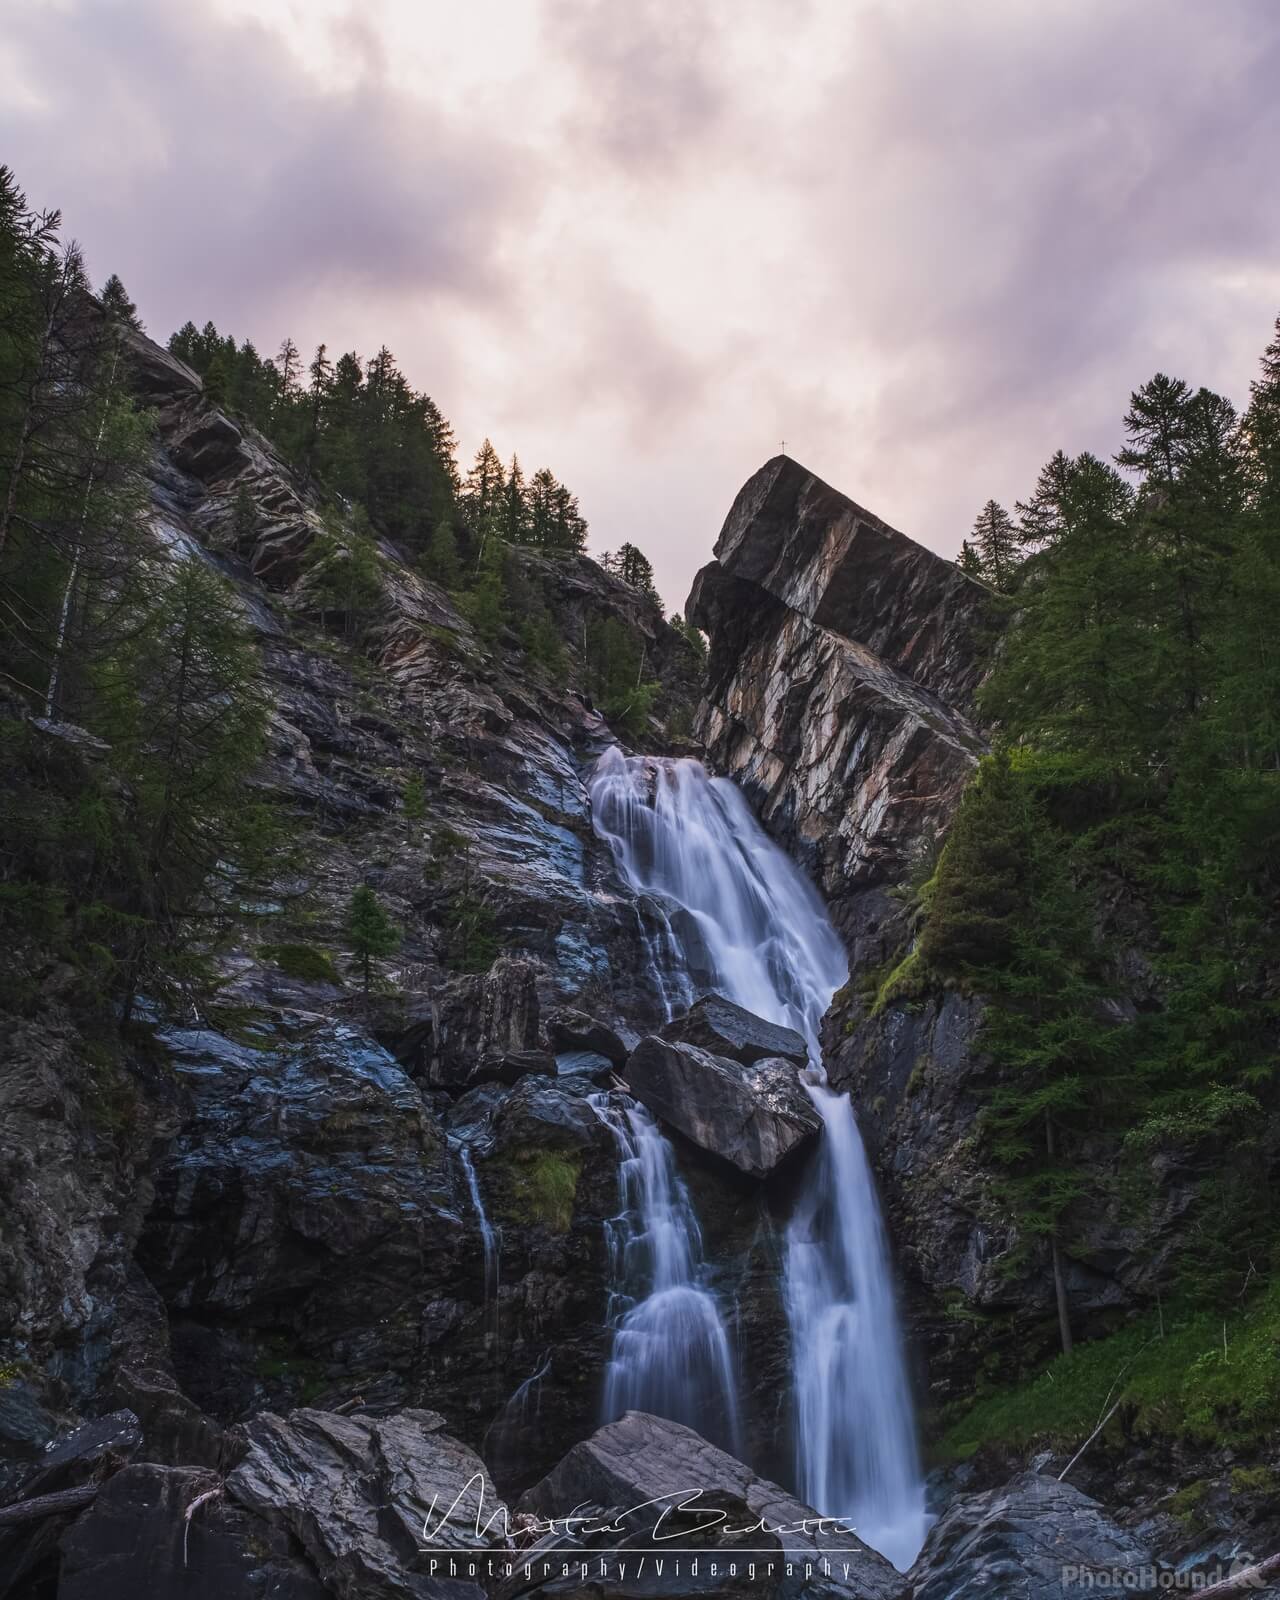 Image of Biolet Waterfall by Mattia Bedetti